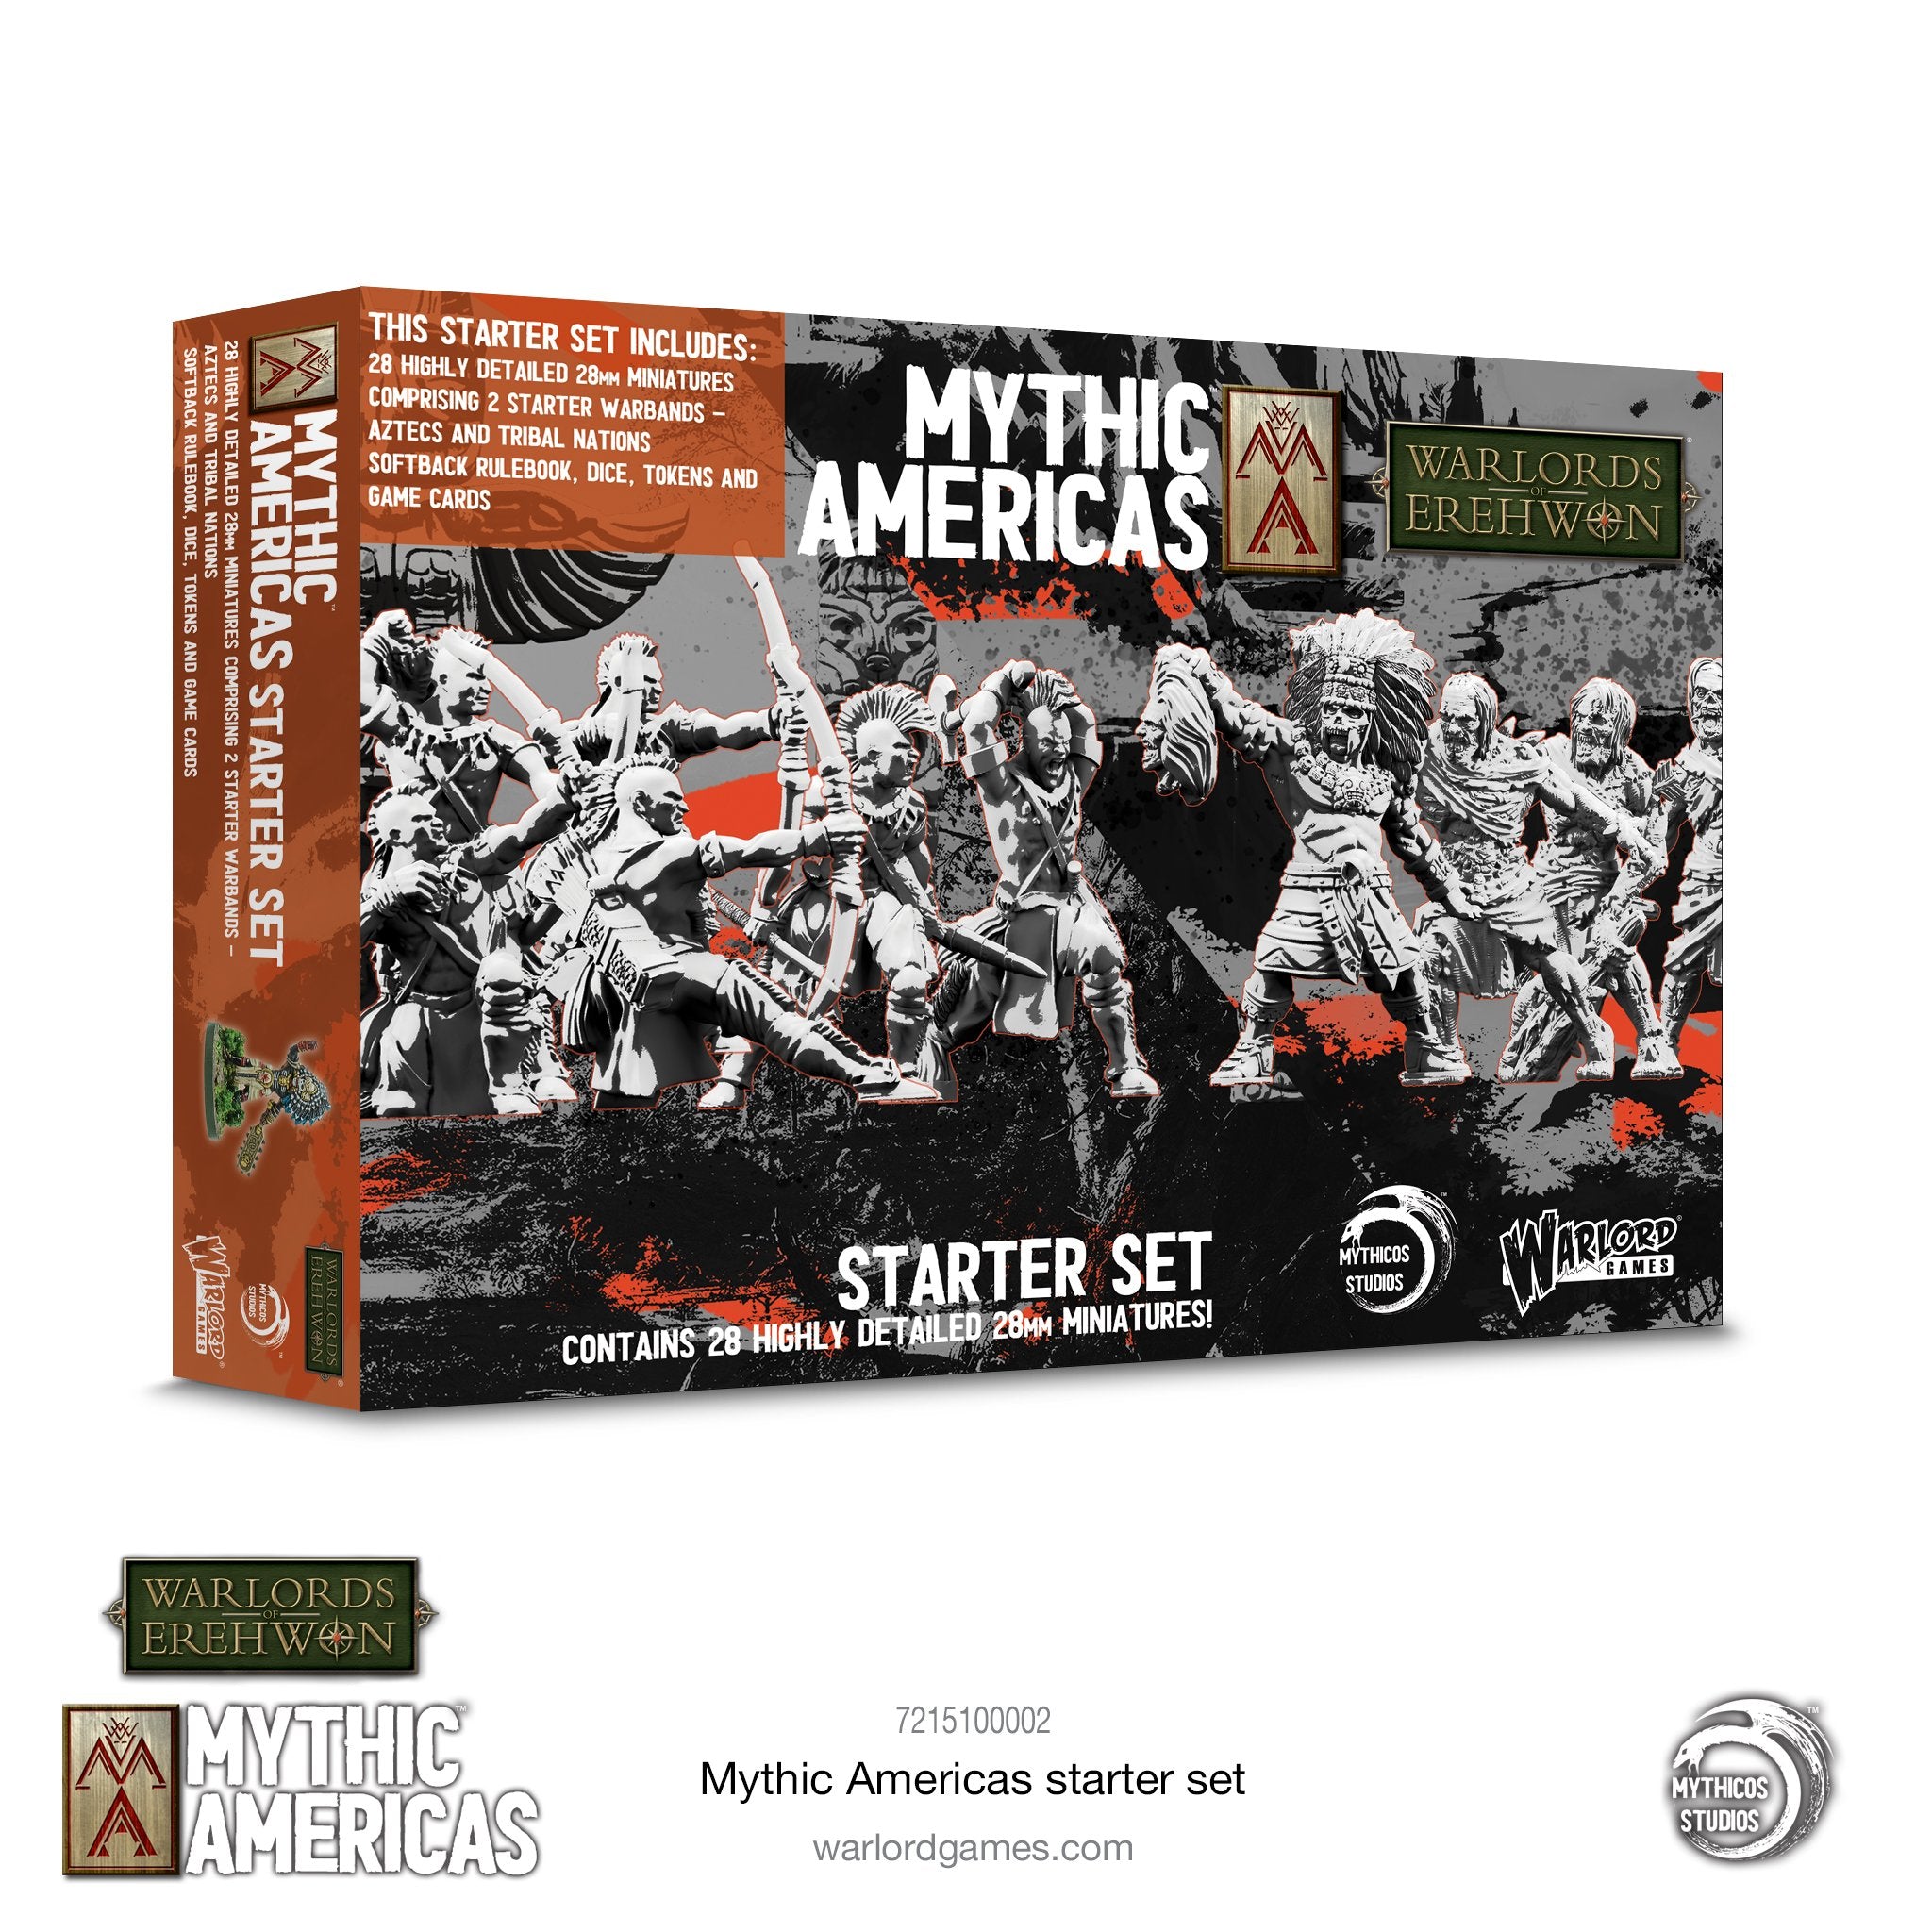 Mythic Americas - Aztec & Tribal Nations Starter Set